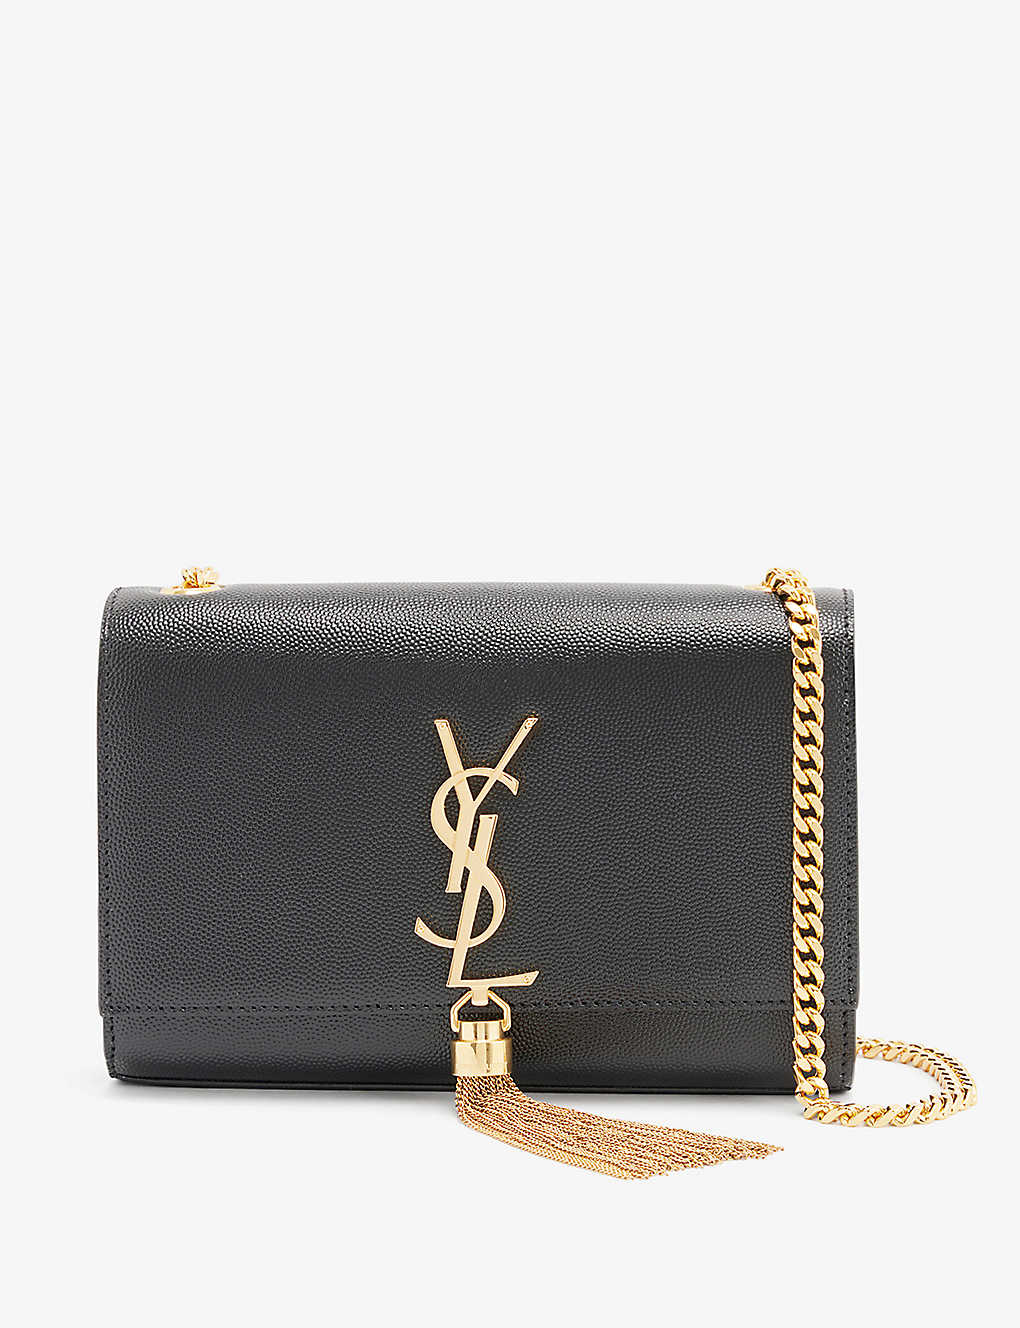 Saint Laurent Womens Black/gold Kate Mono Leather Shoulder Bag